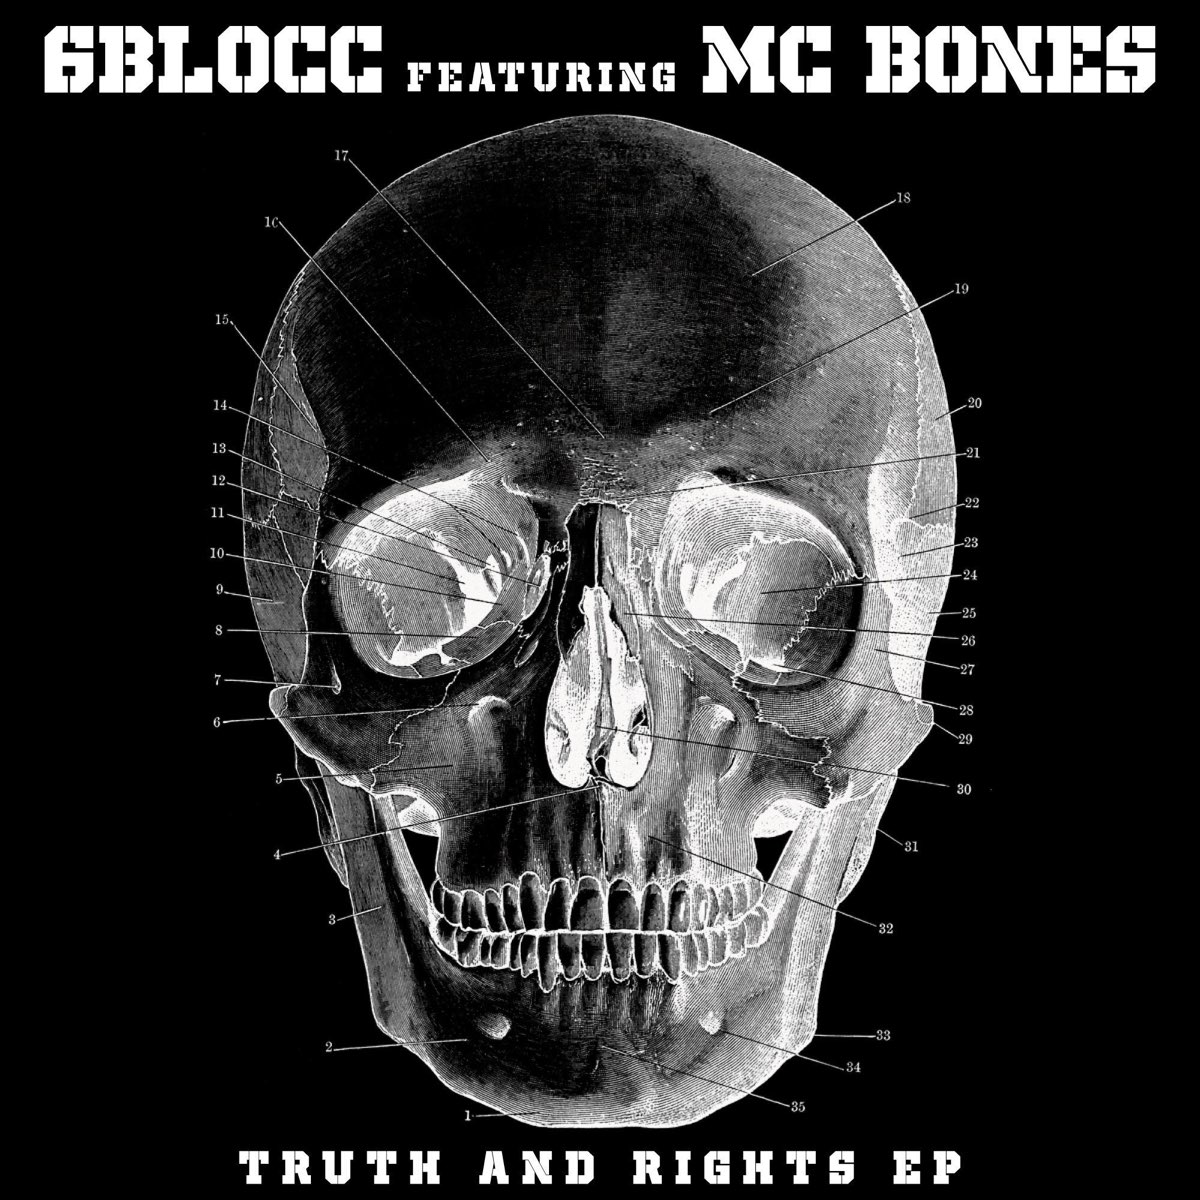 Old Bones MC. Jt music to the bone